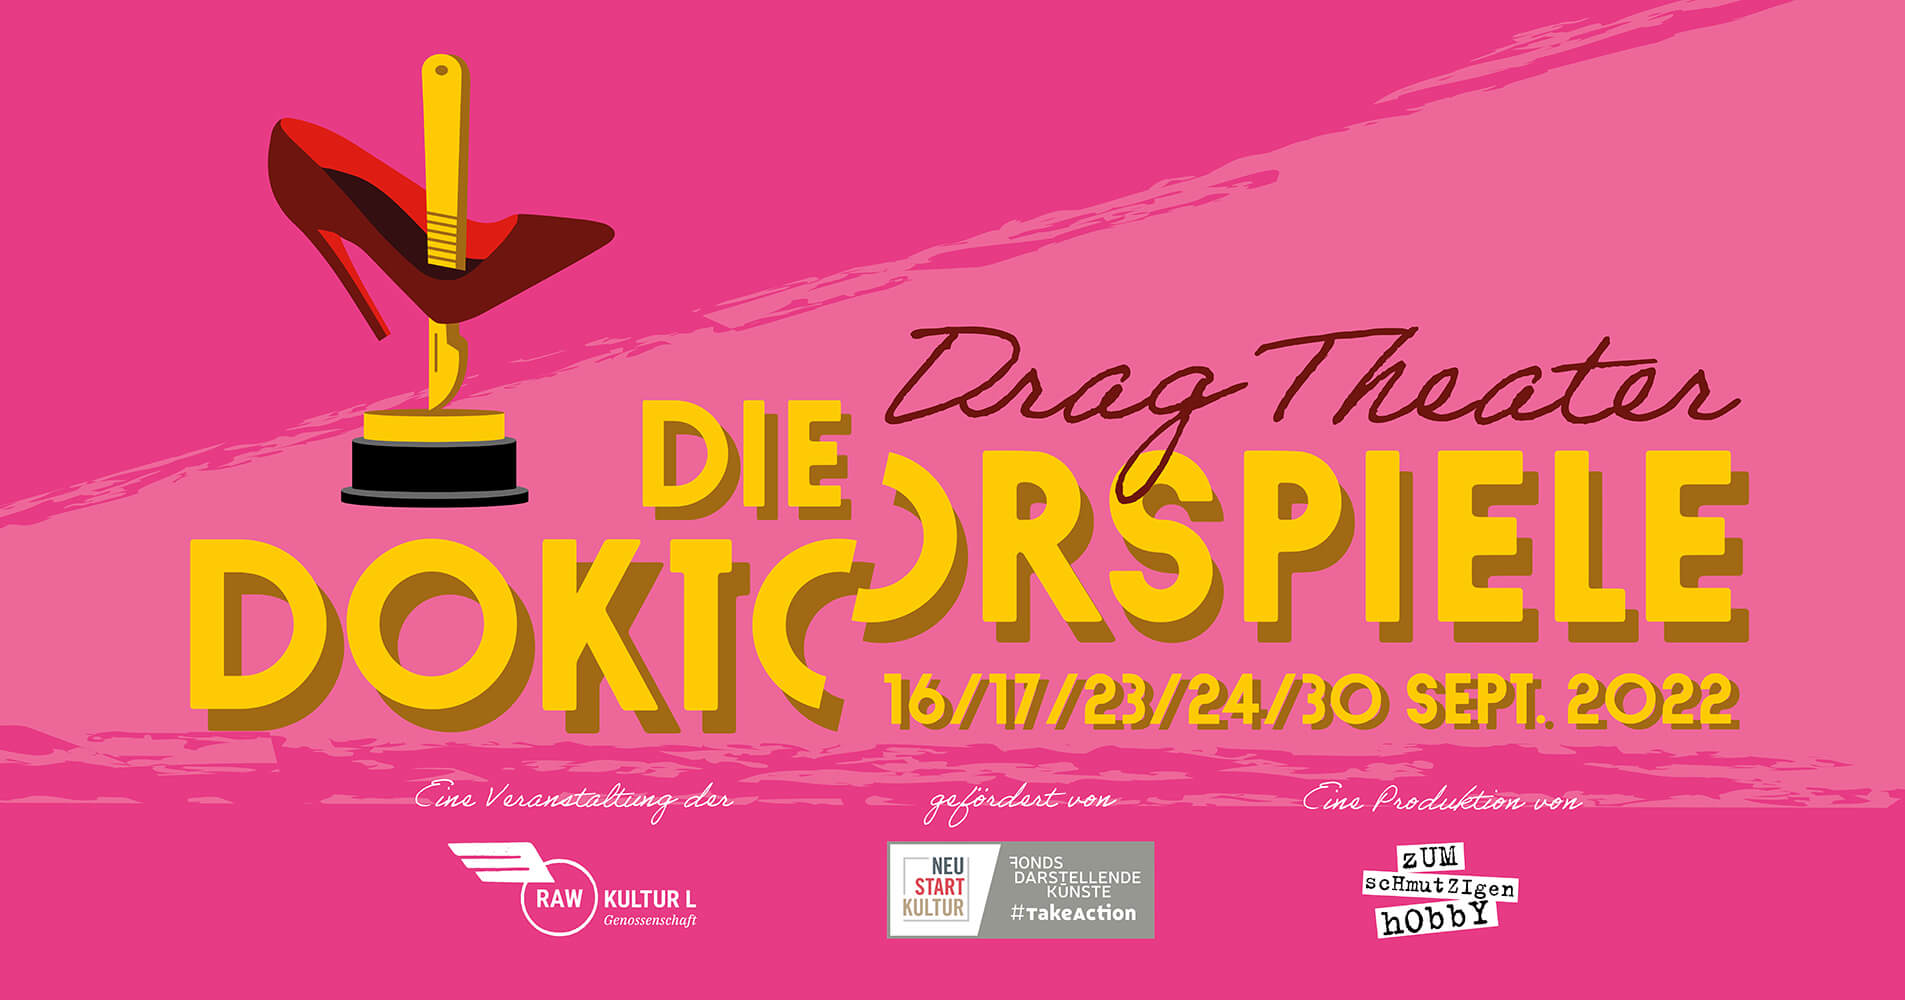 Die Doktorspiele, Drag Theater, Berlin, RAW, Web banner